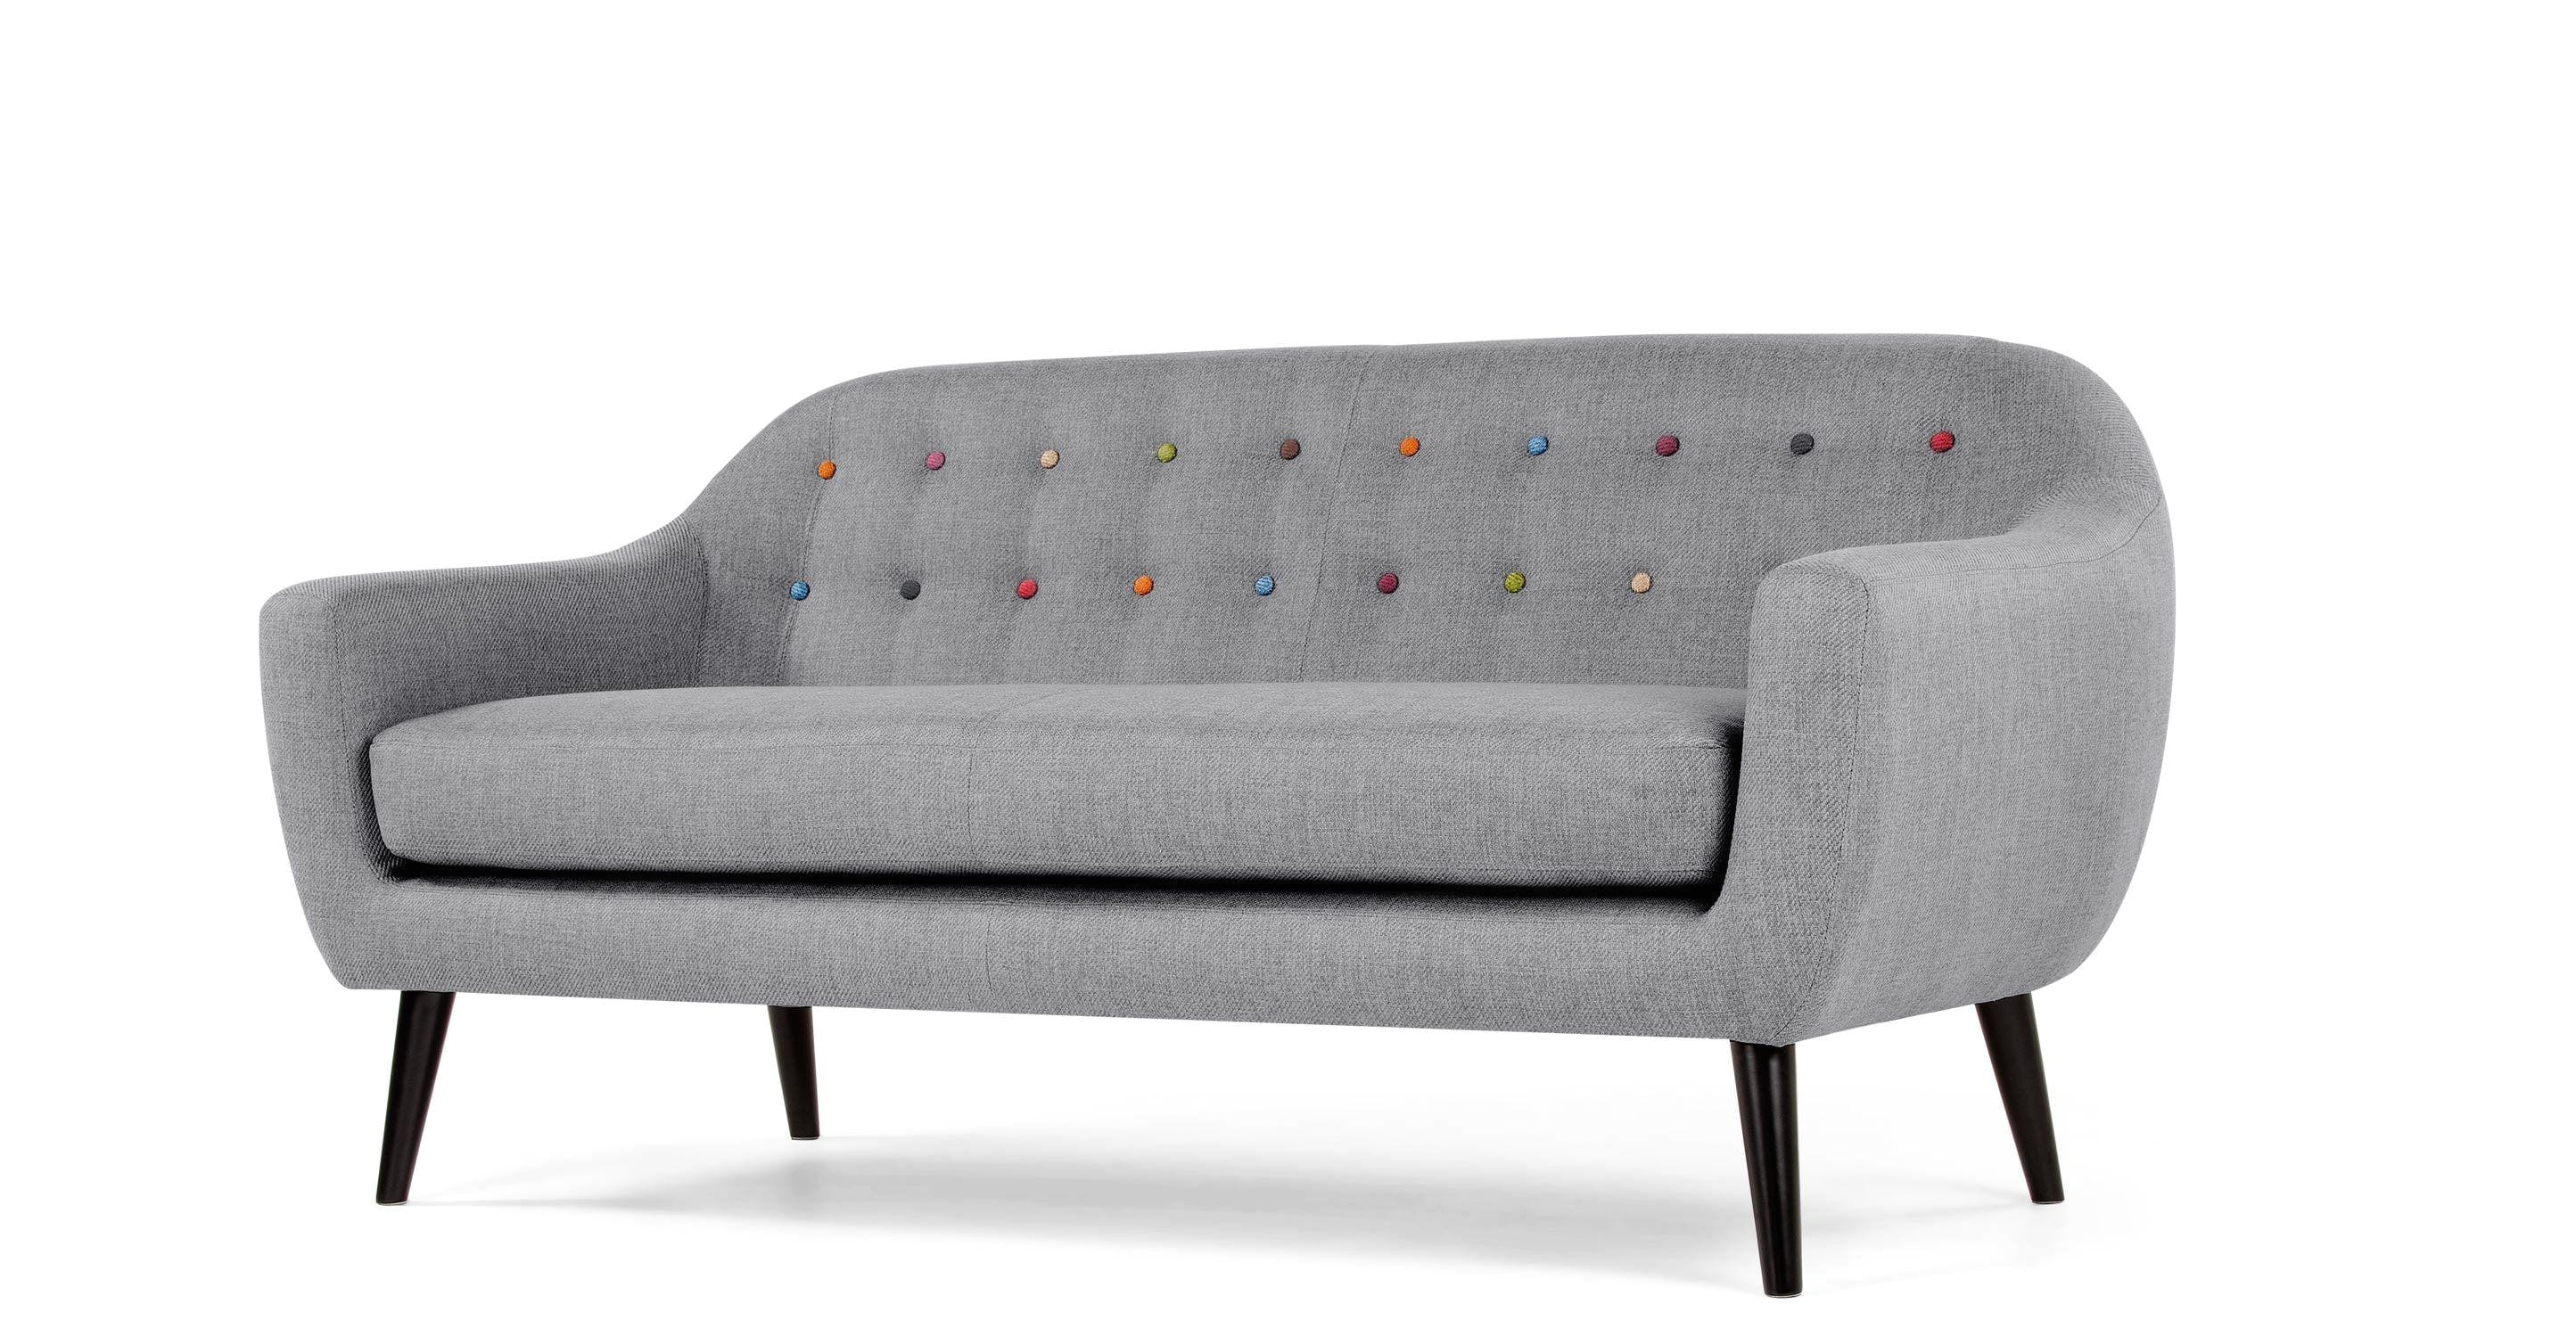 White Sleeper sofa Elegant Furniture Sleeper Loveseat Inspirational Wicker Outdoor sofa 0d